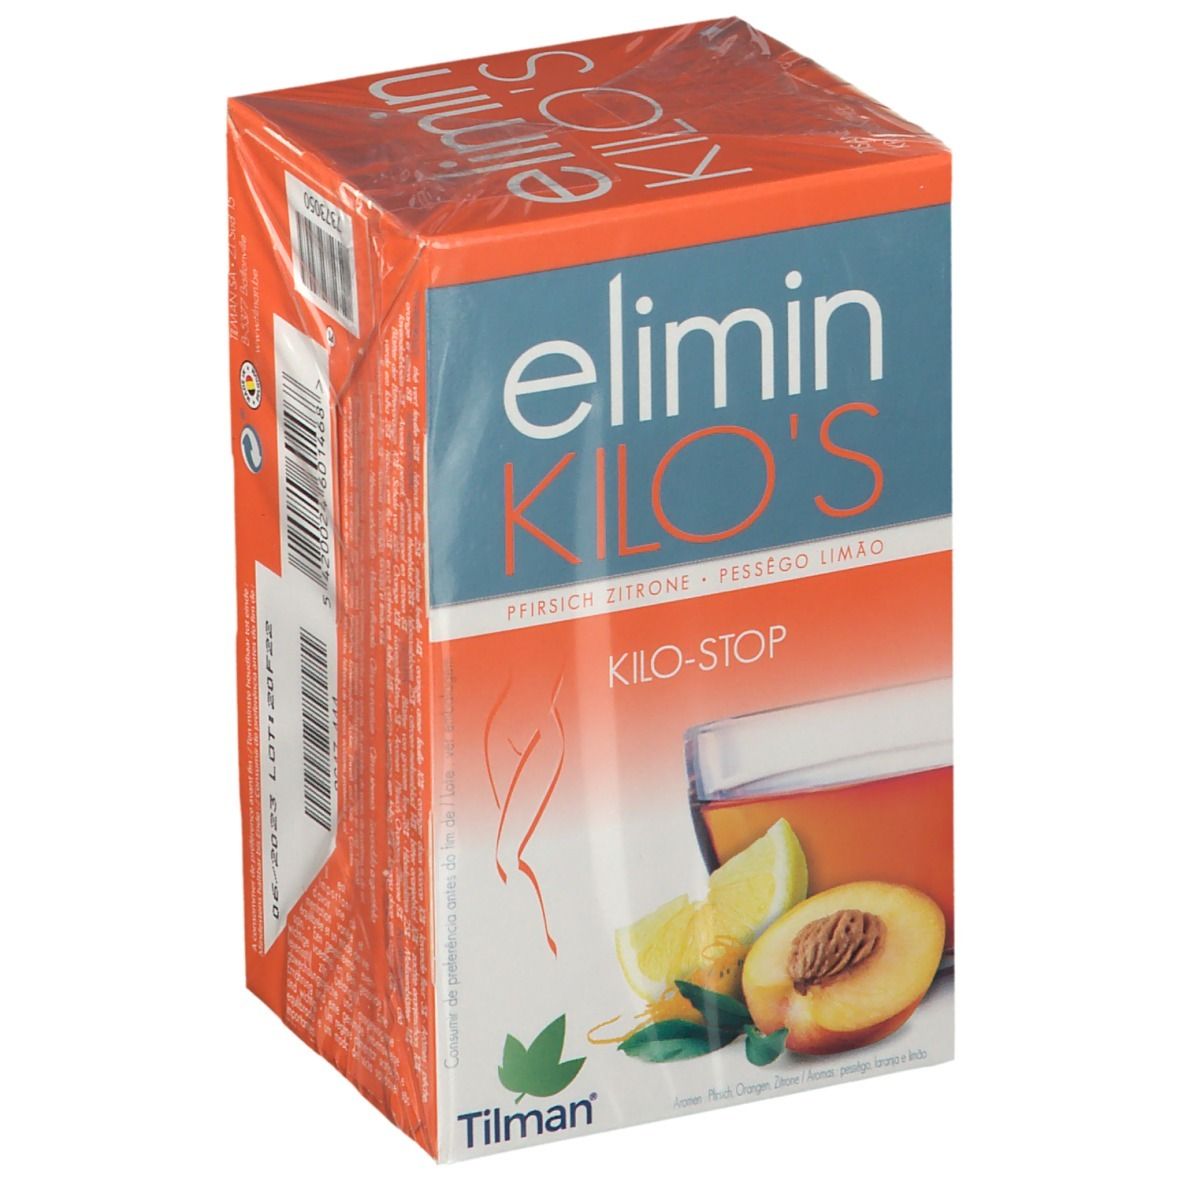 Tilman® elimin KILO´S Pêche-Citron